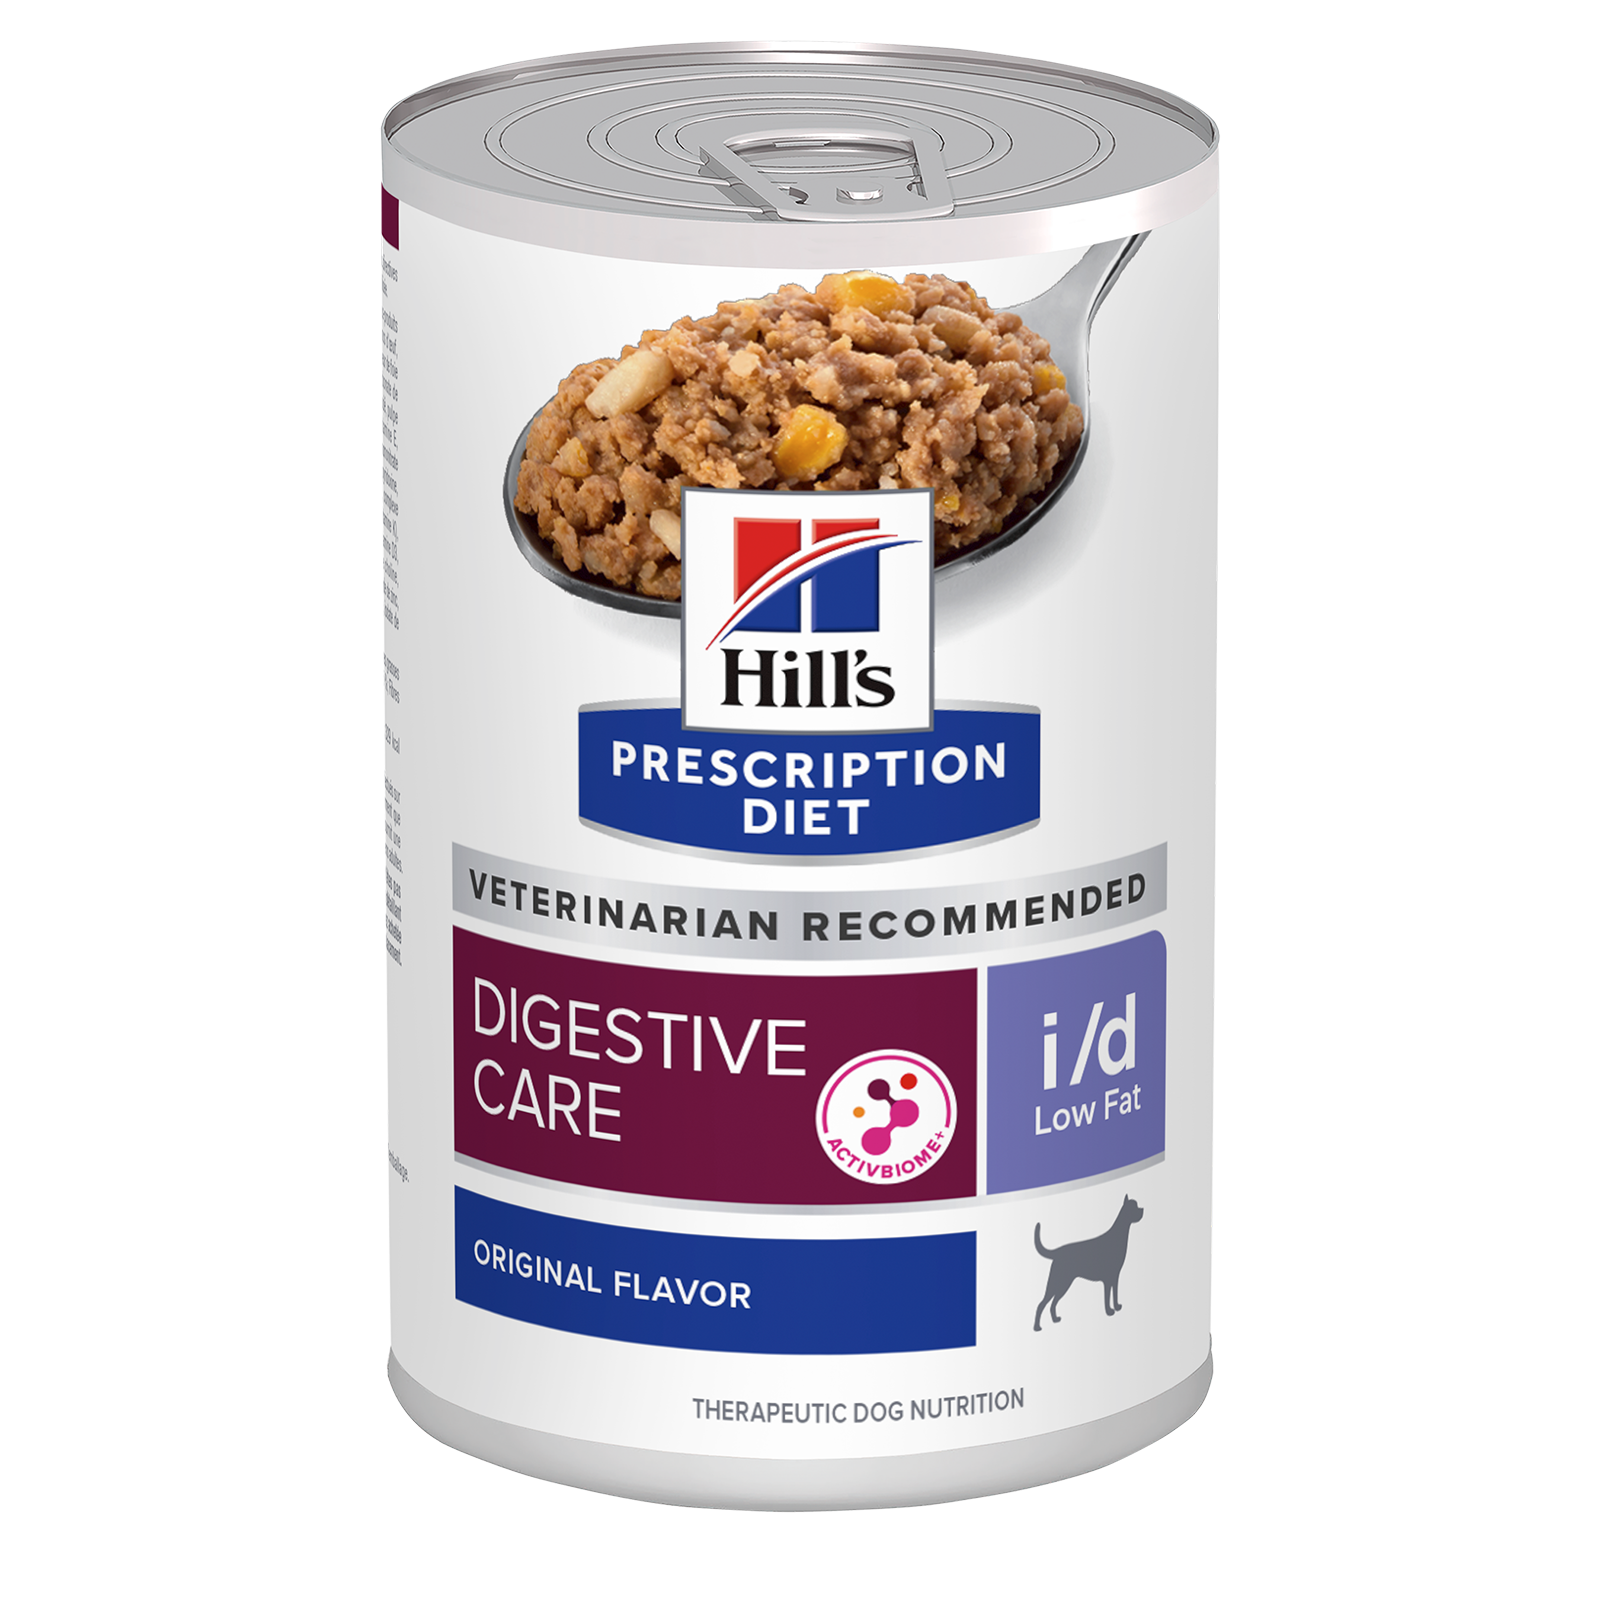 Hill's Prescription Diet Dog Food Can i/d Low Fat Digestive Care